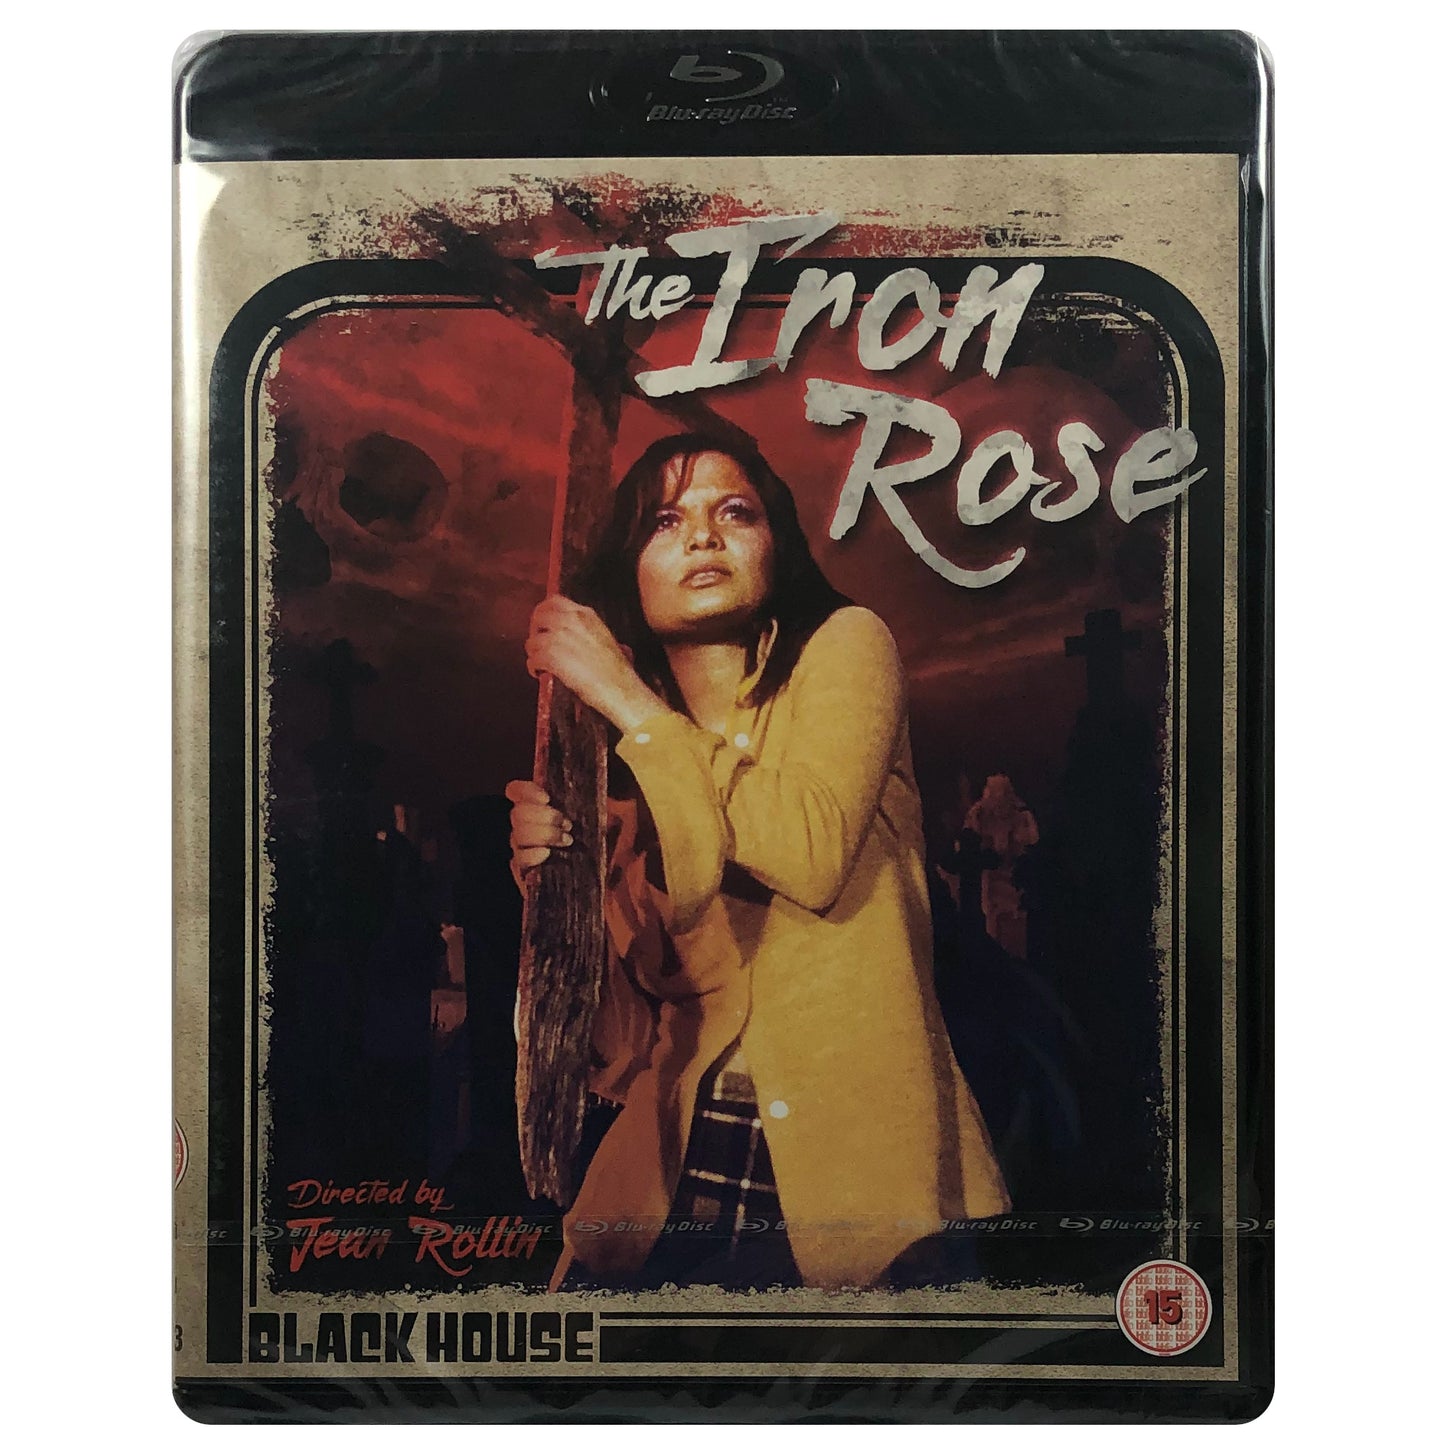 The Iron Rose Blu-Ray